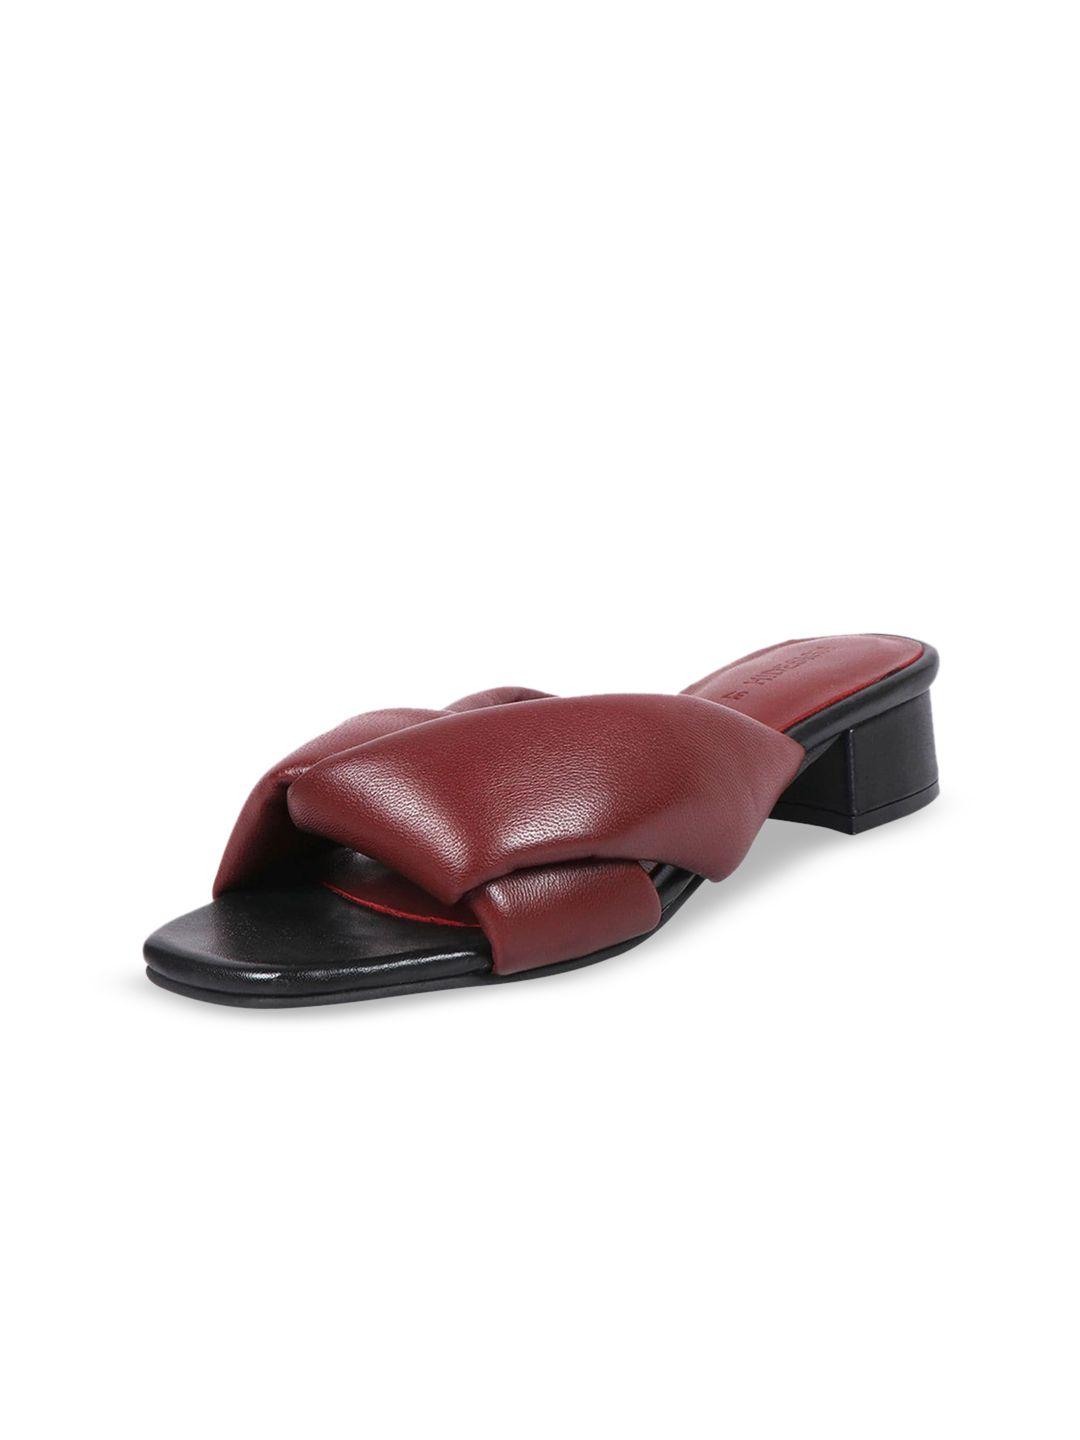 hidesign-lille-leather-open-toe-block-heels